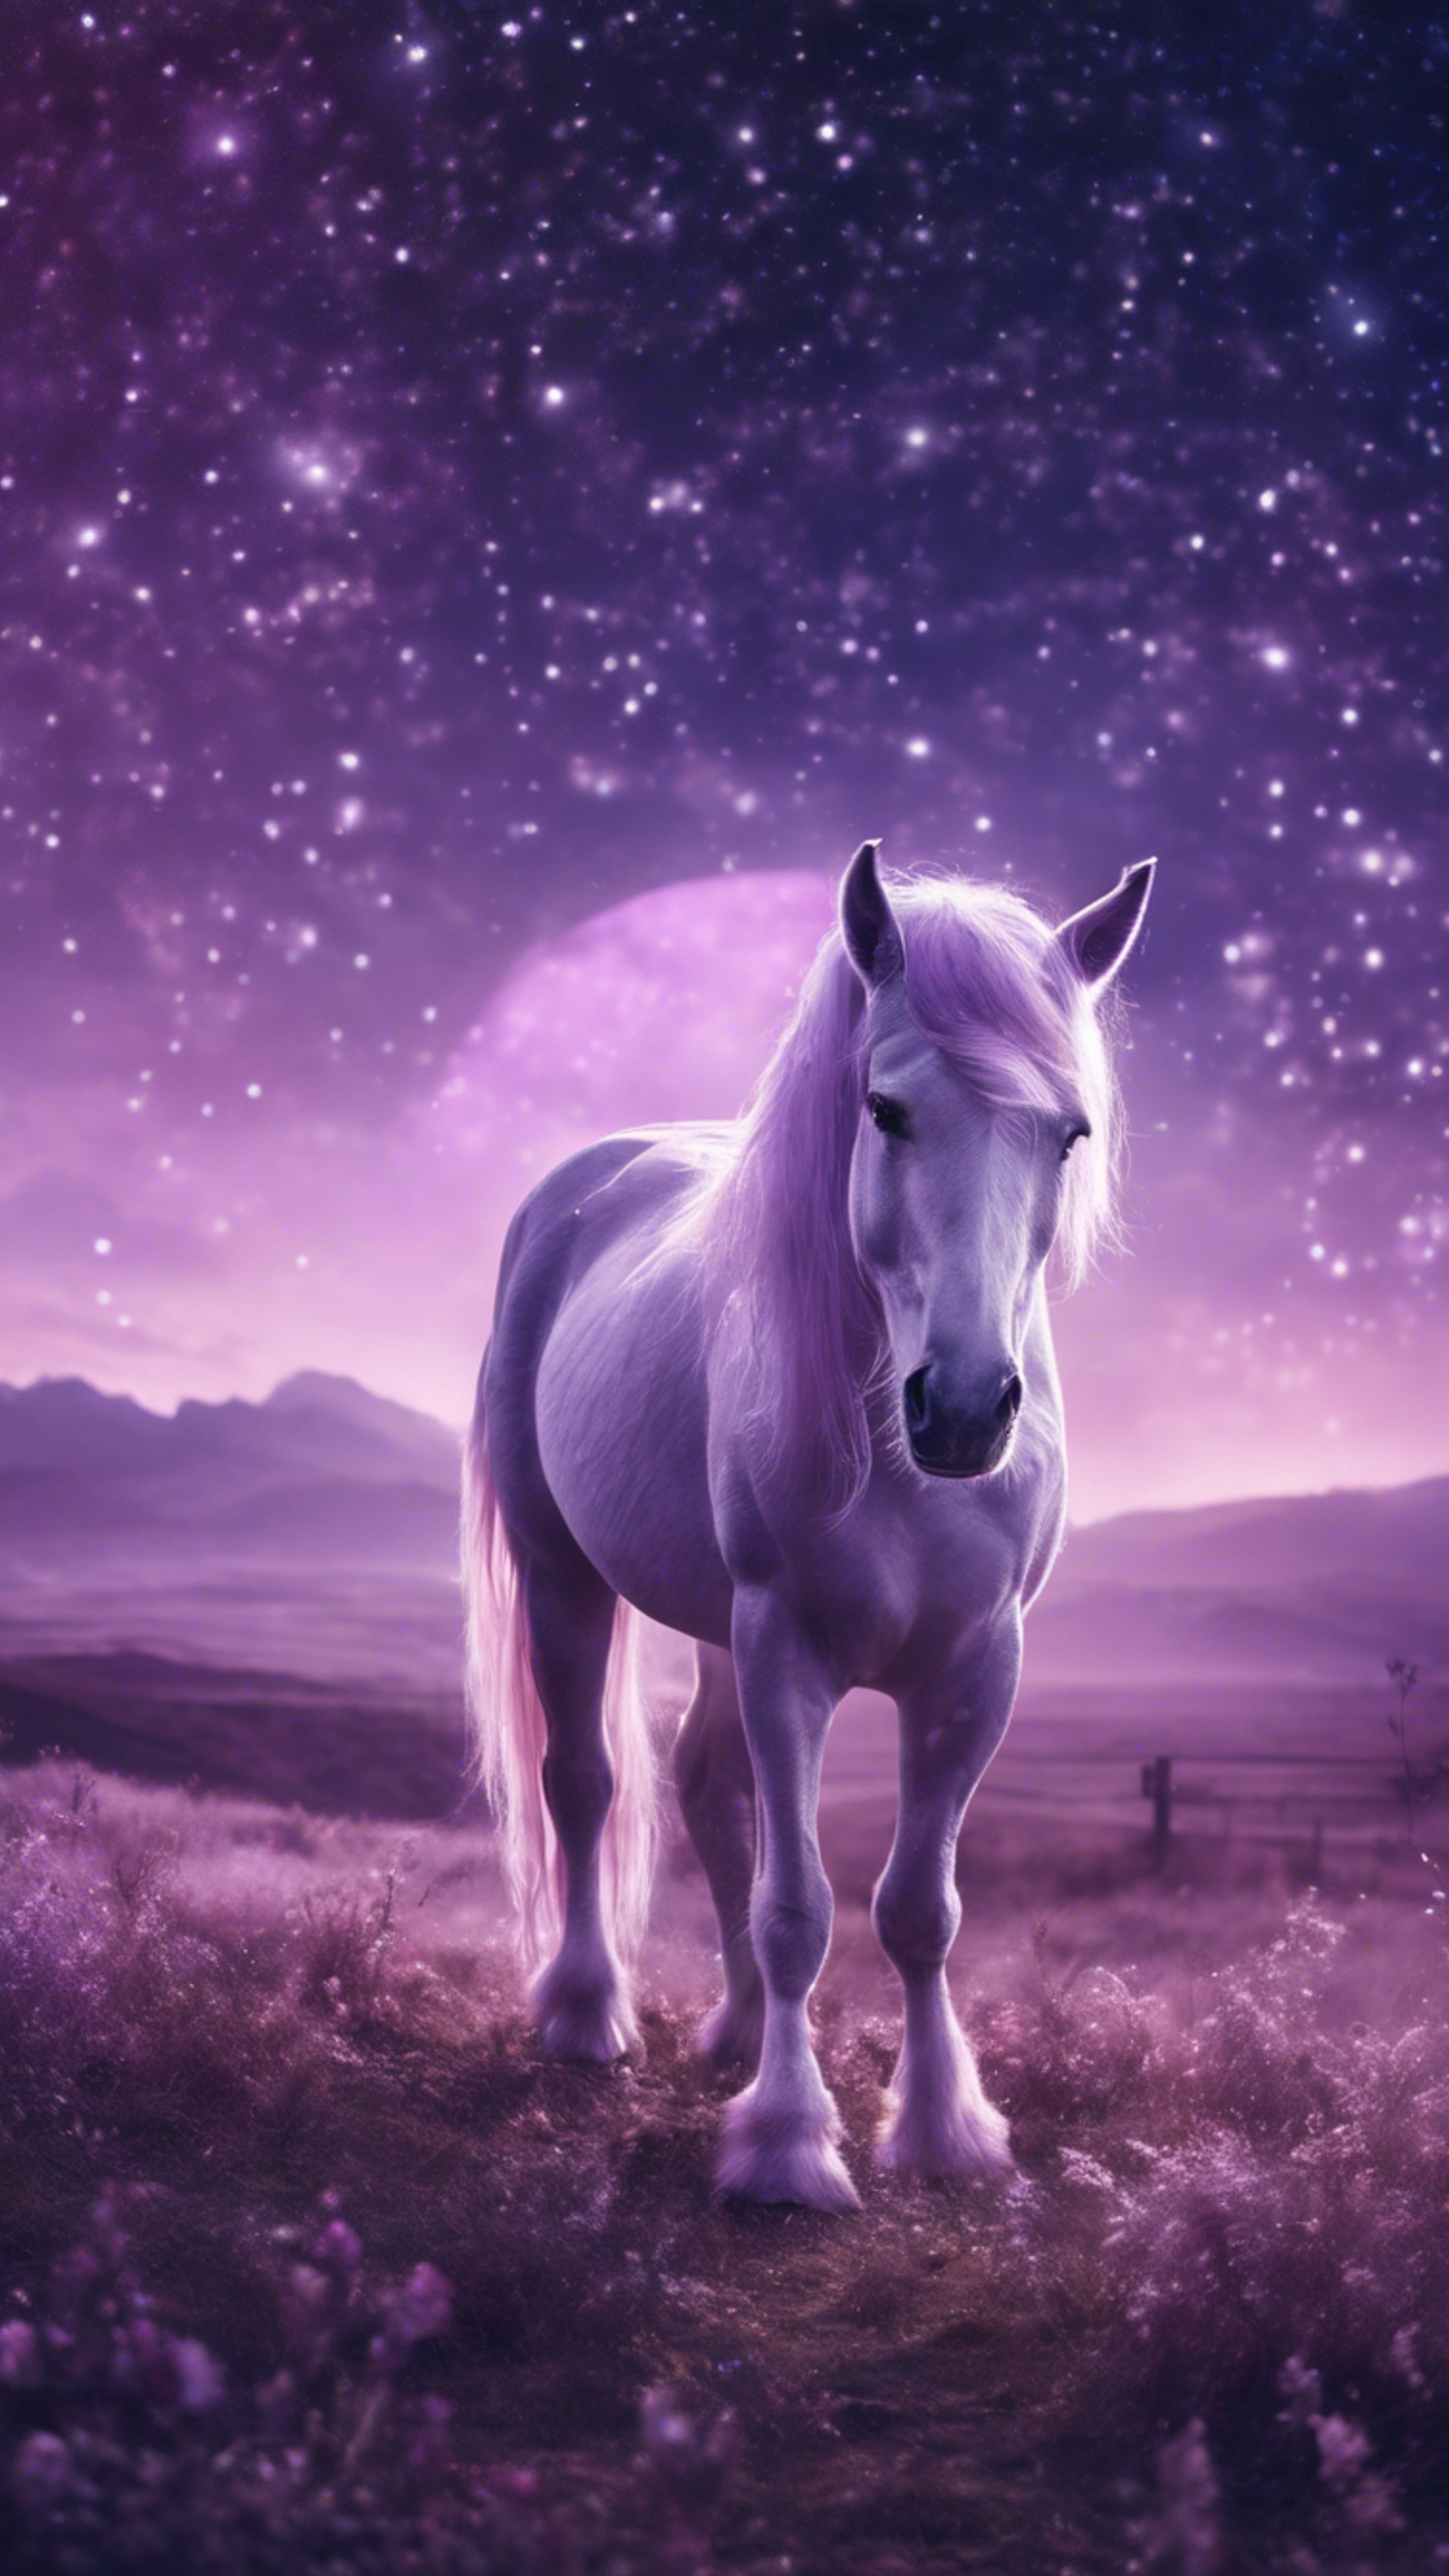 A light purple unicorn grazing in a mystical landscape under the starry night. Tapéta[ebdebf087ad14a189ba8]